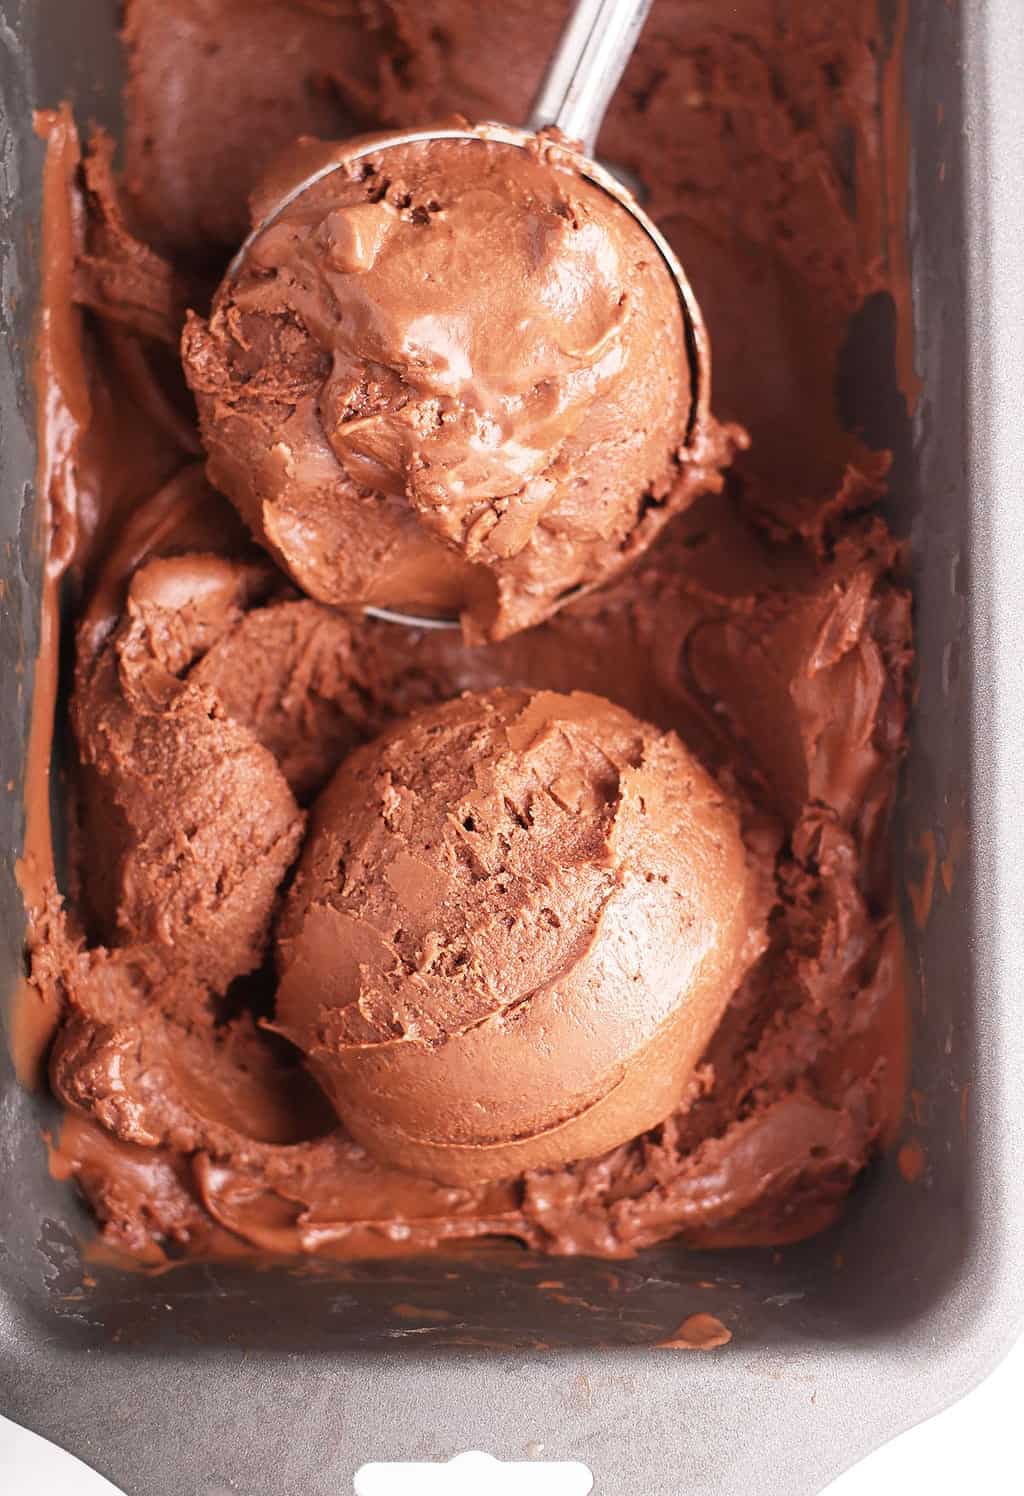 Two scoops of vegan chocolate ice cream